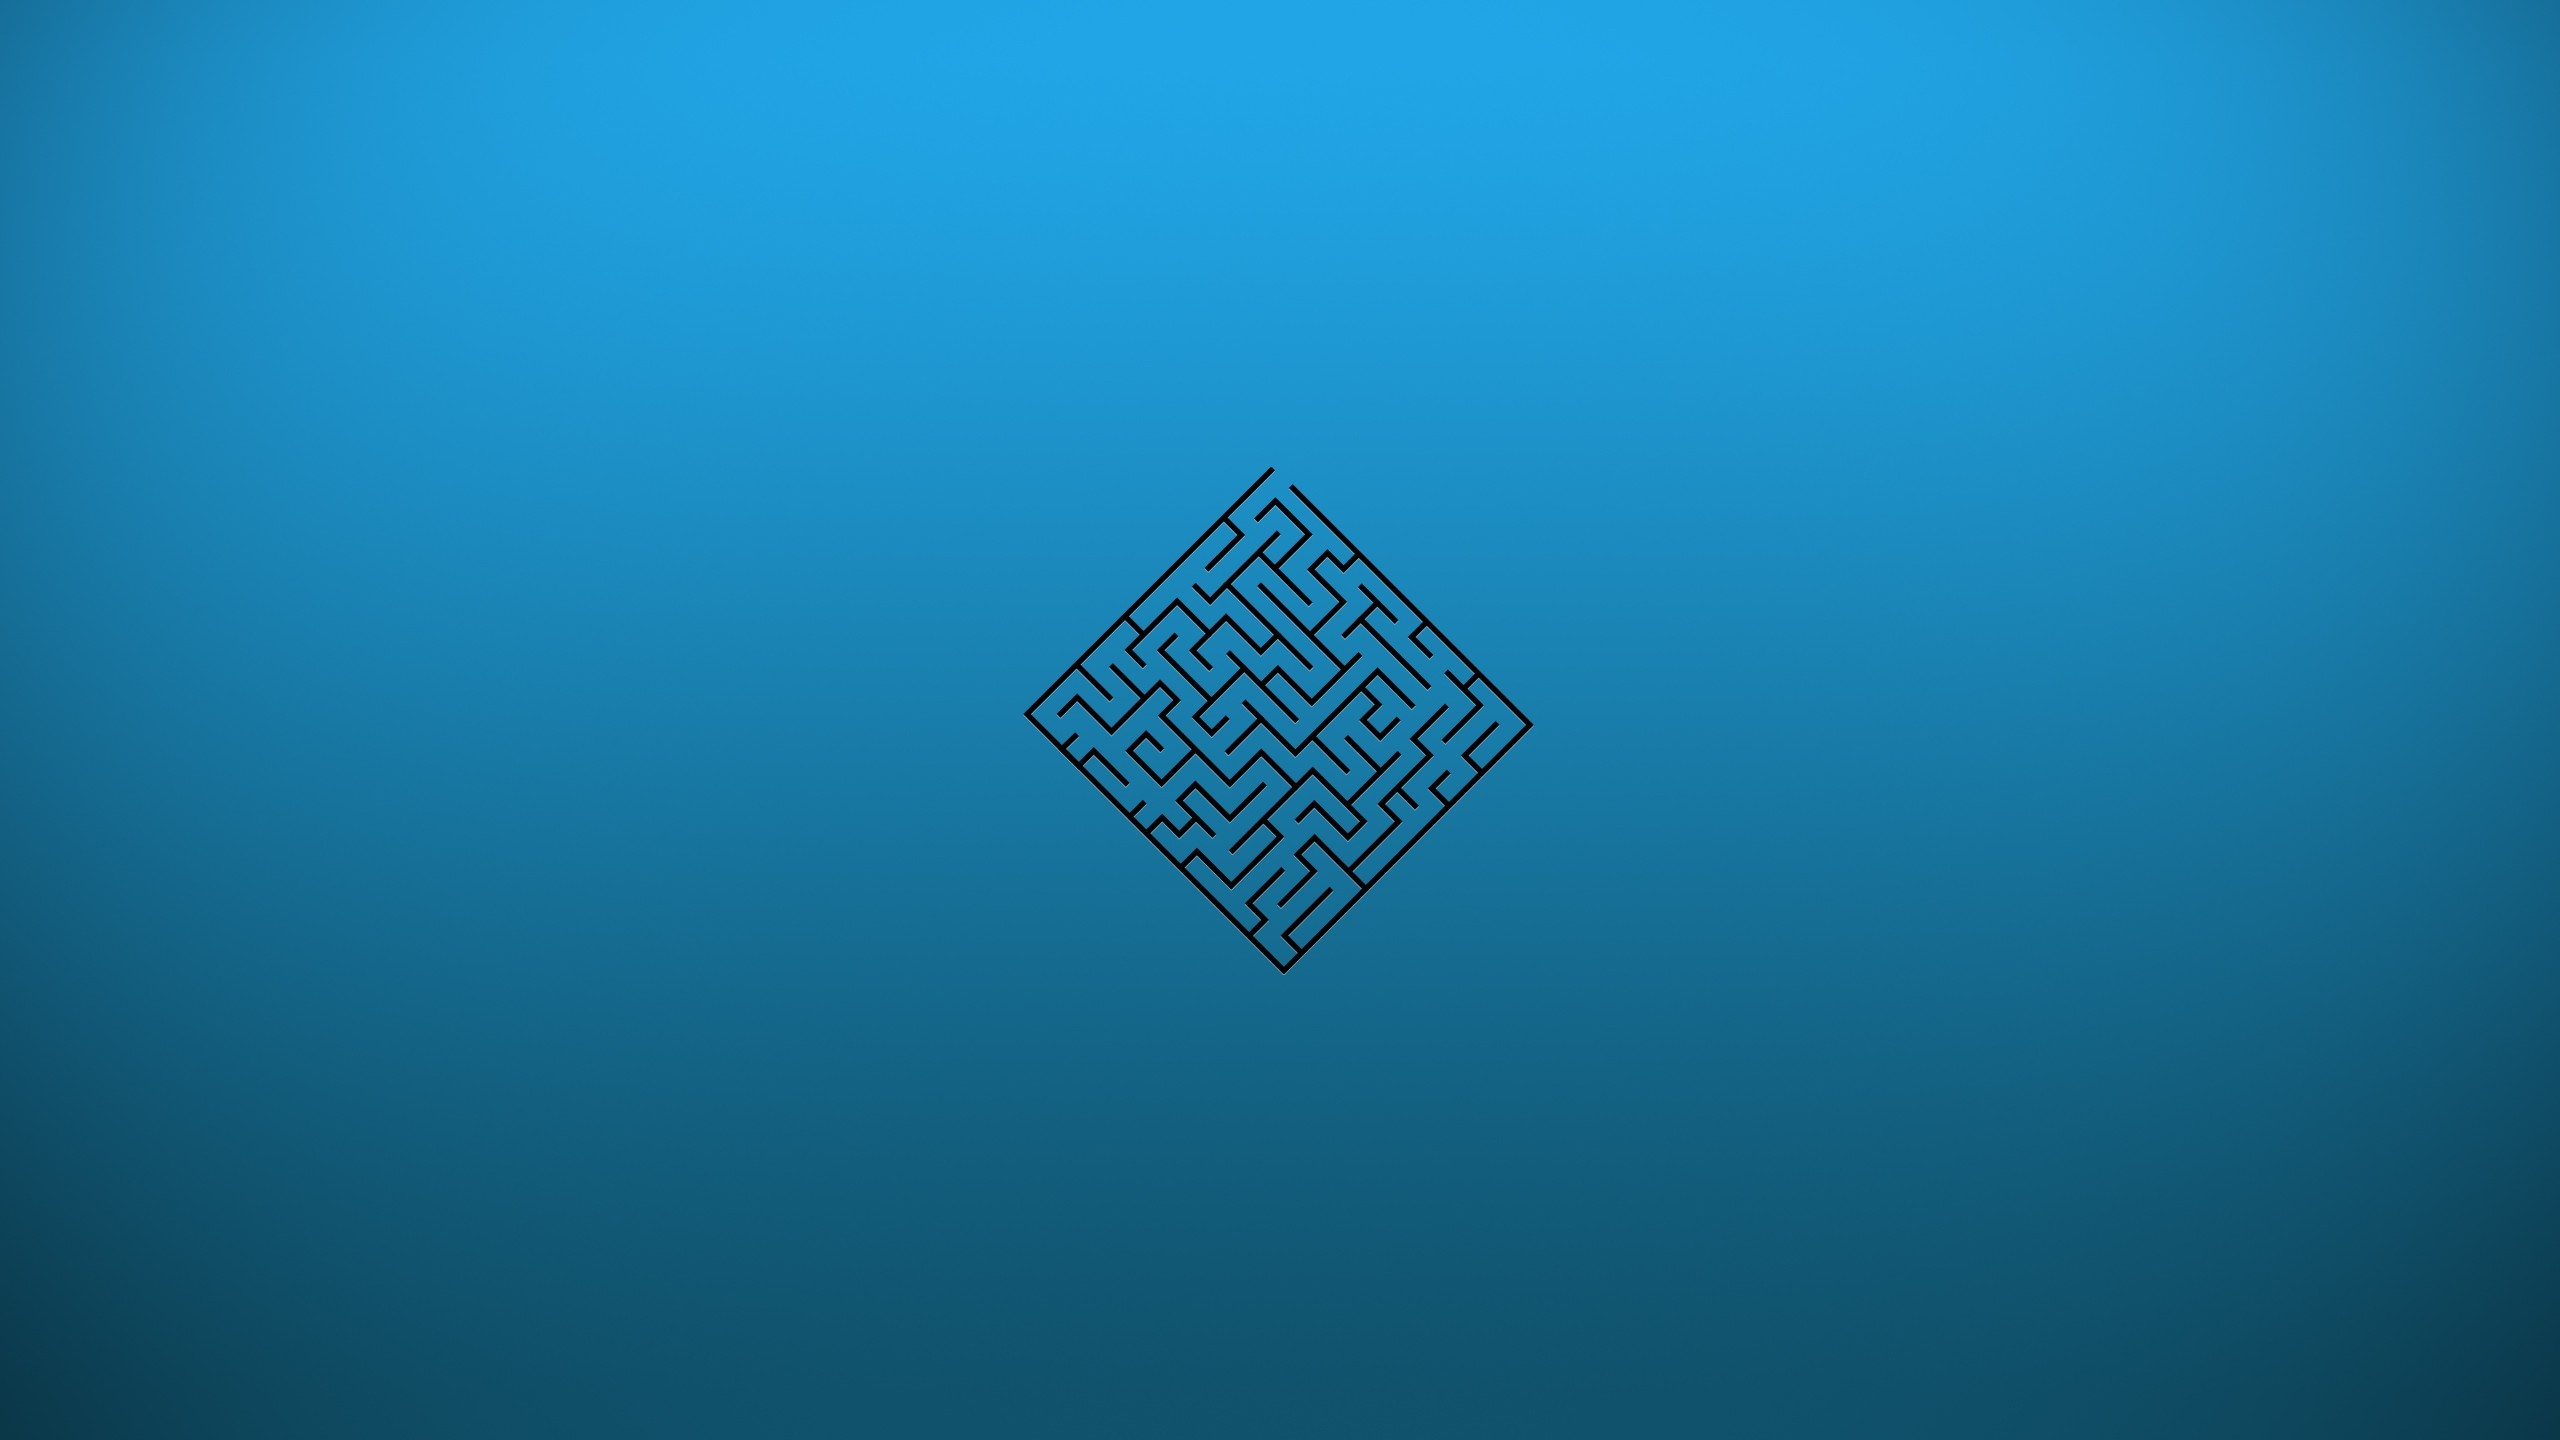 General 2560x1440 maze artwork blue background geometric figures simple background minimalism